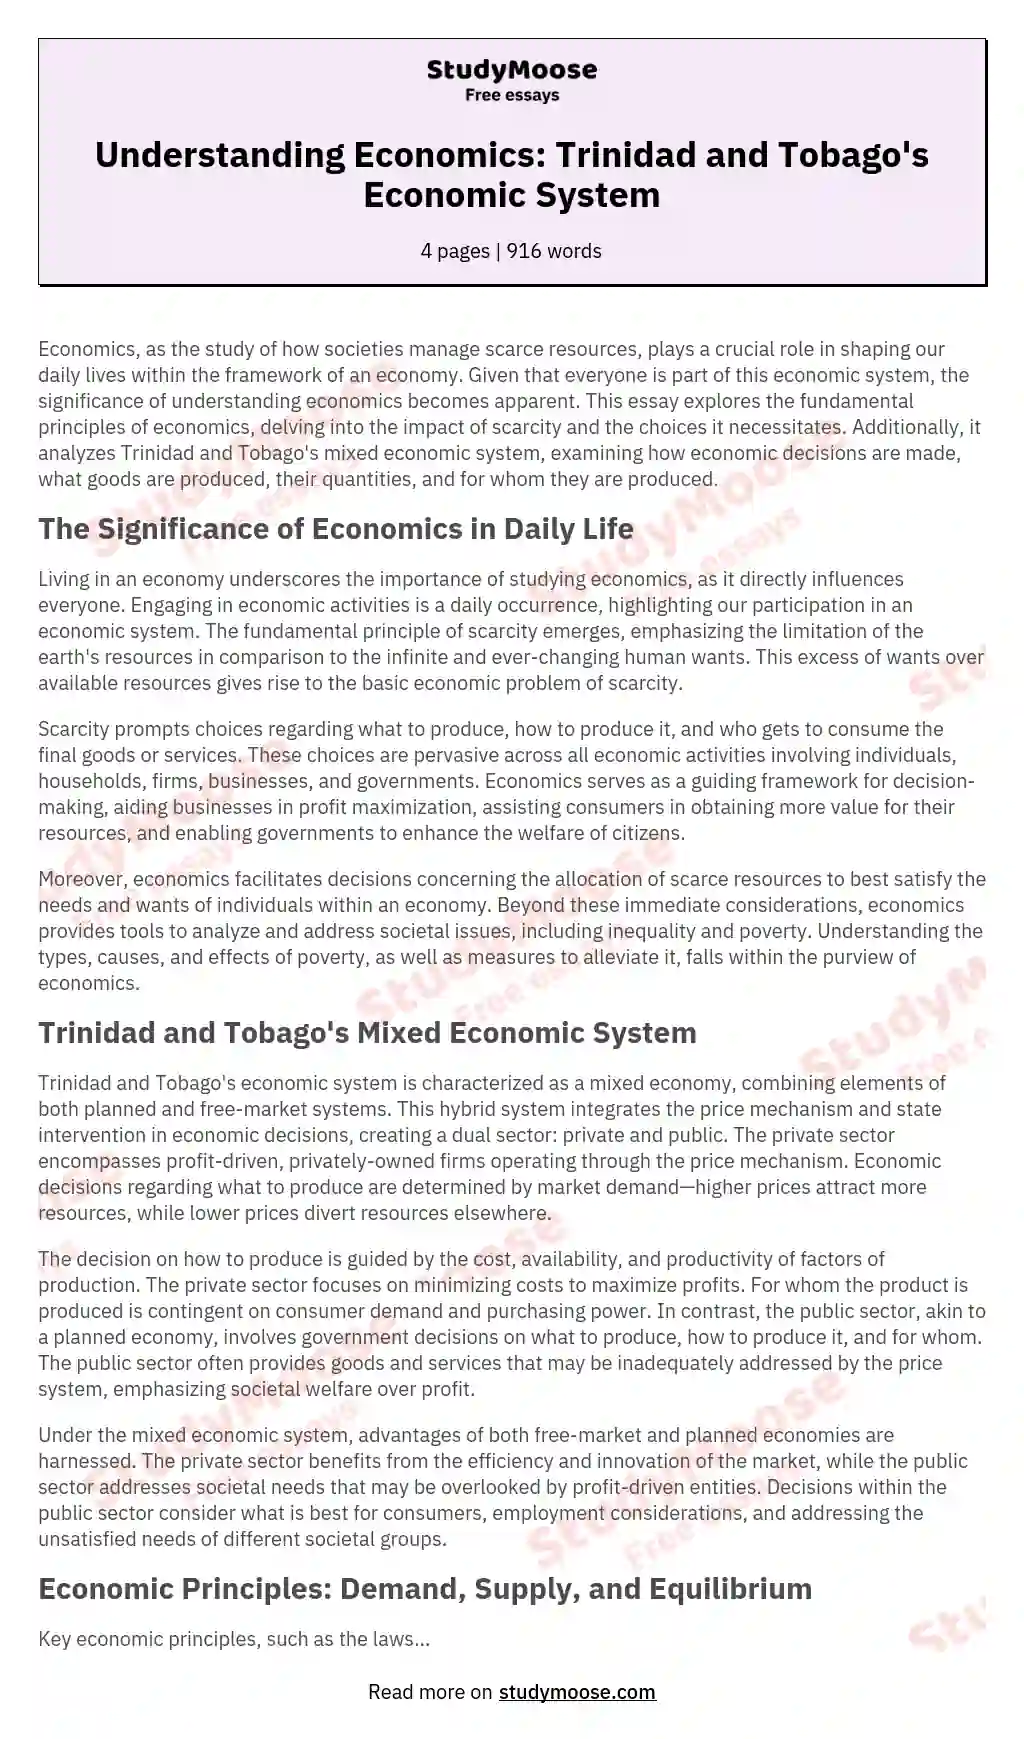 Understanding Economics: Trinidad and Tobago's Economic System essay